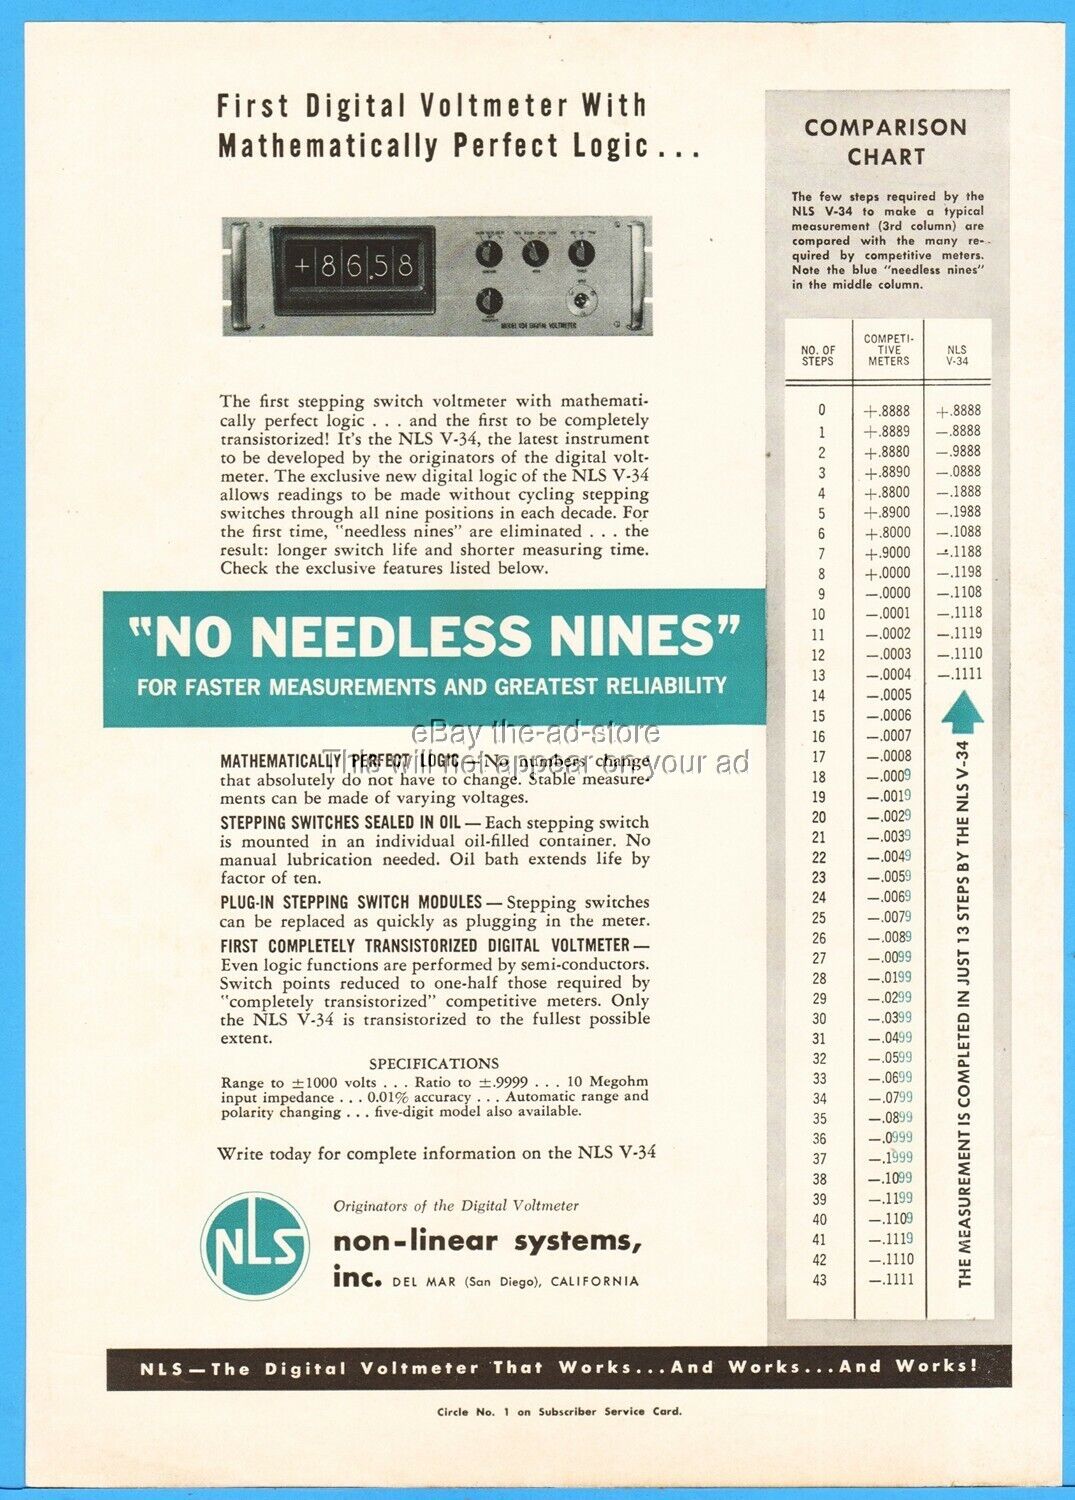 1959 Non-Linear Systems Del Mar San Diego CA Digital Voltmeter NLS V-34 Photo Ad